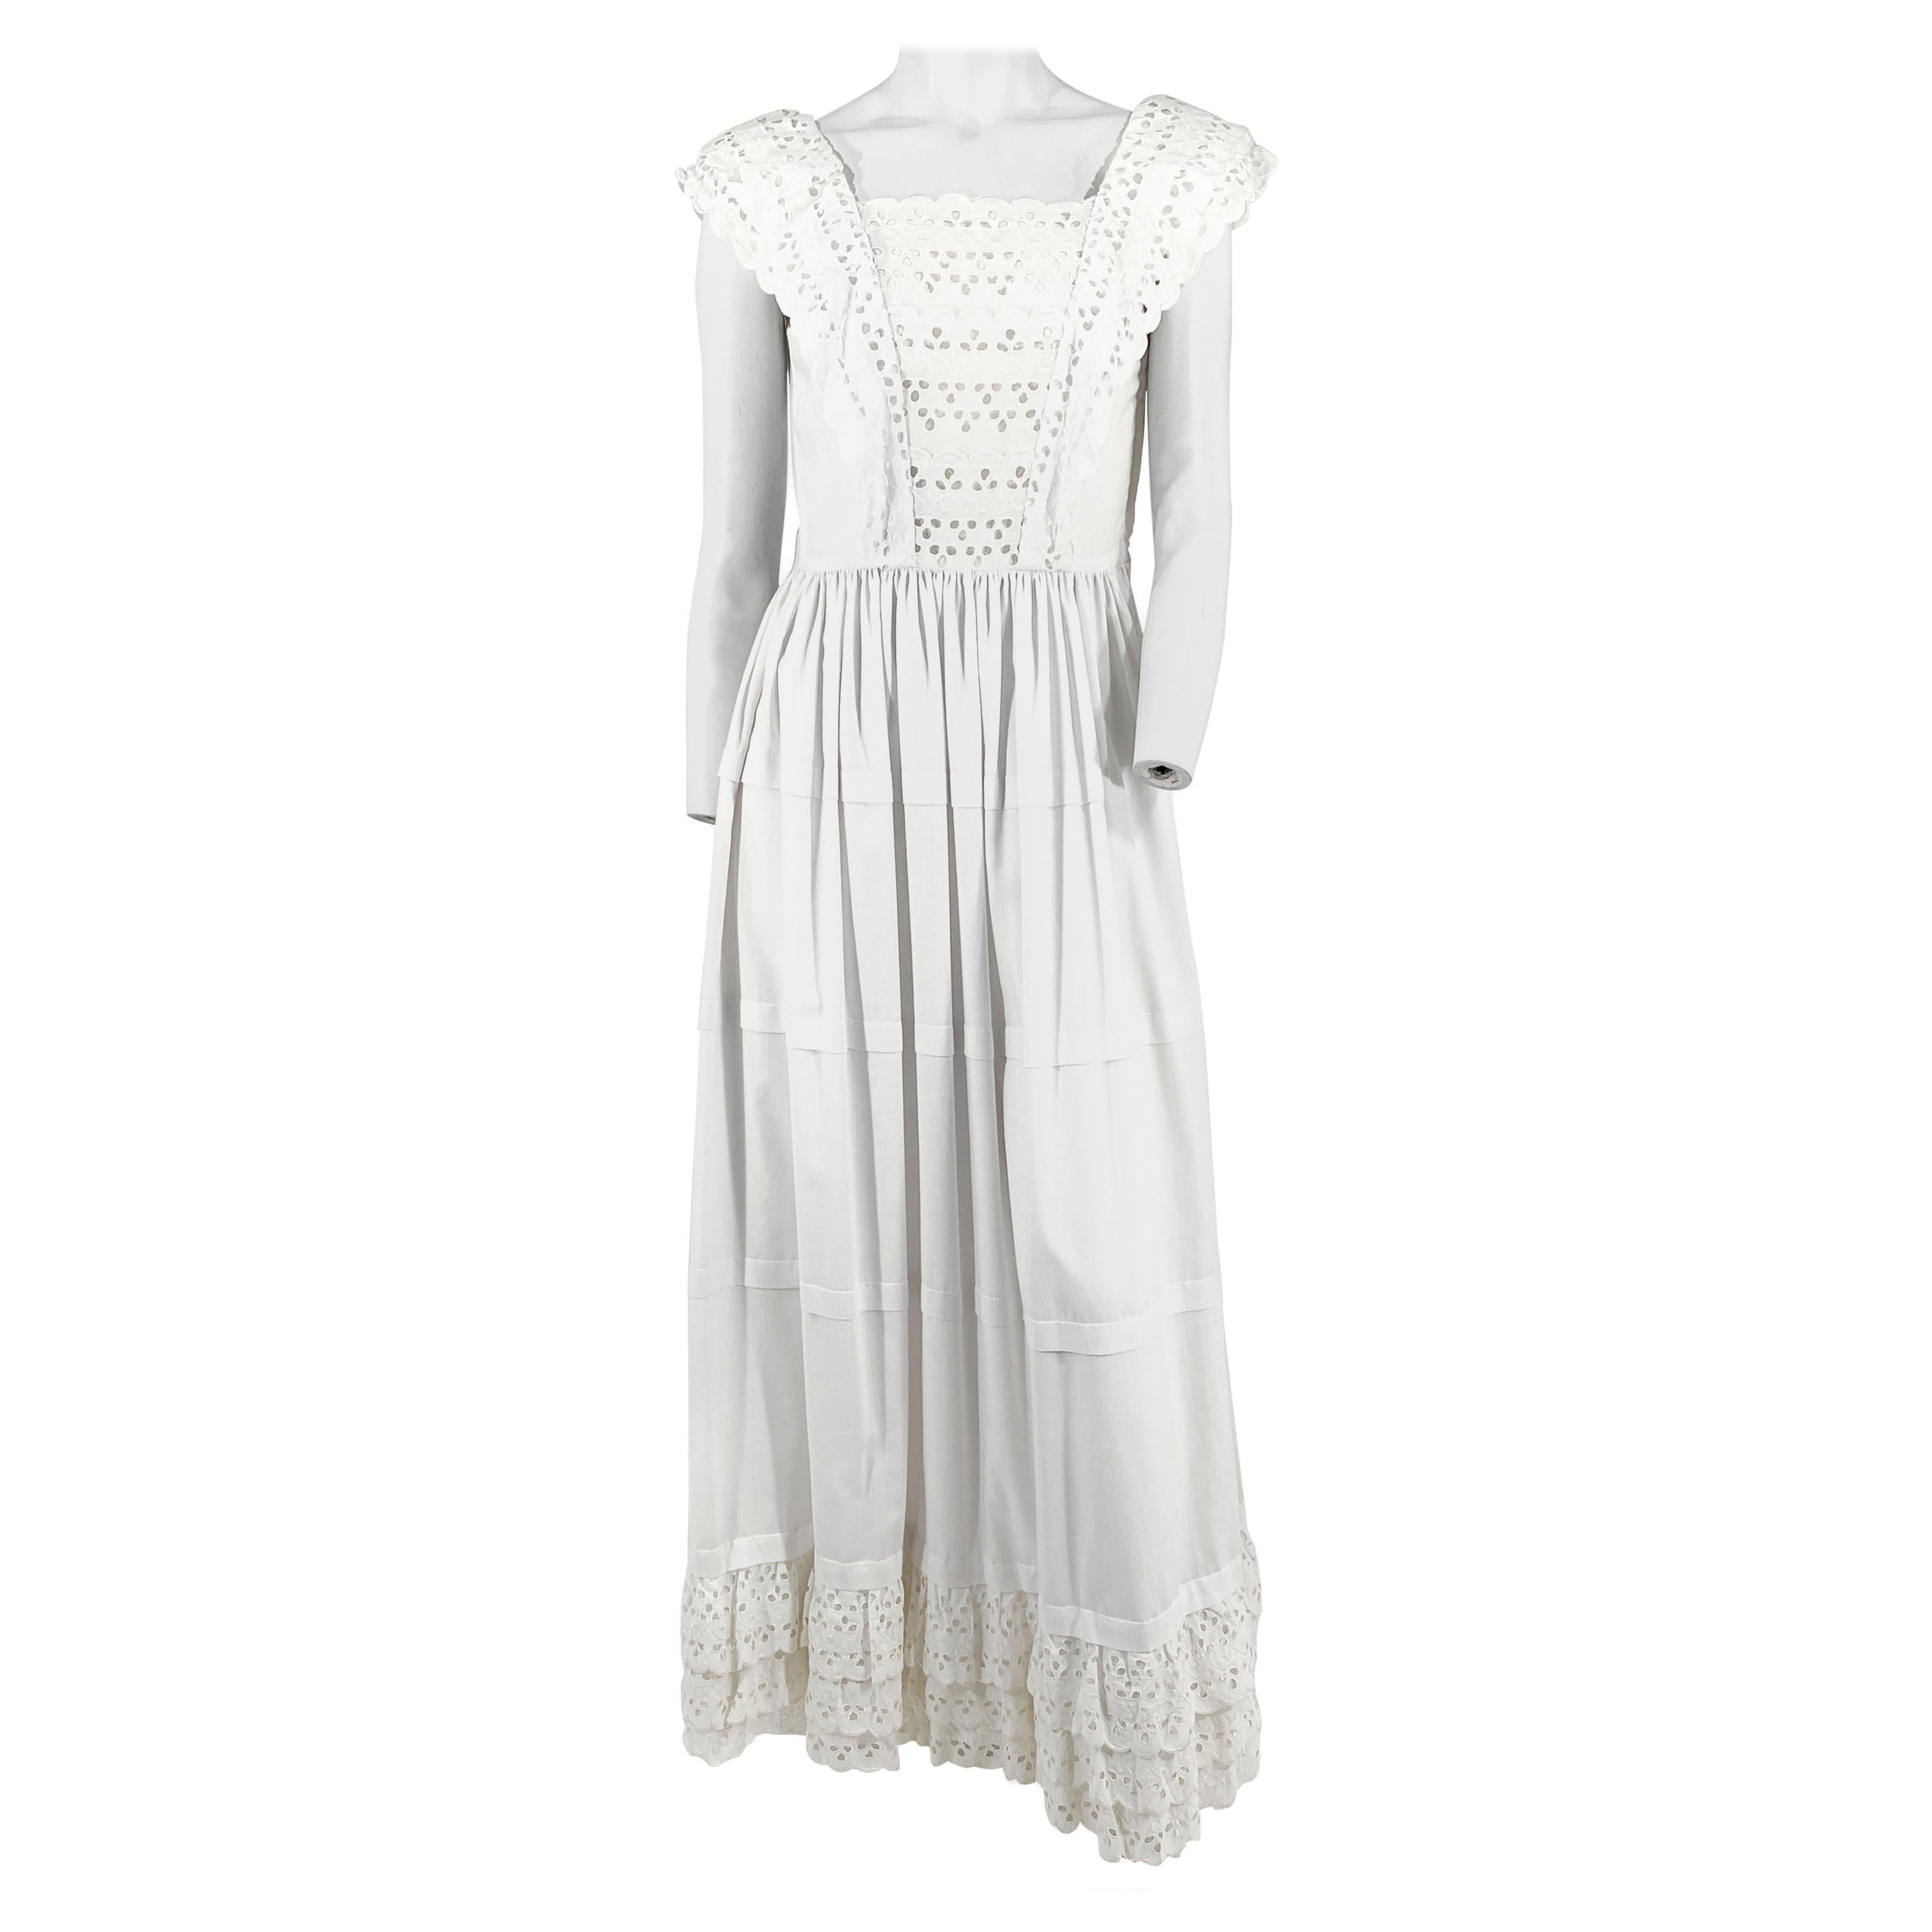 1970s White Cotton Eyelet Cottage Dress